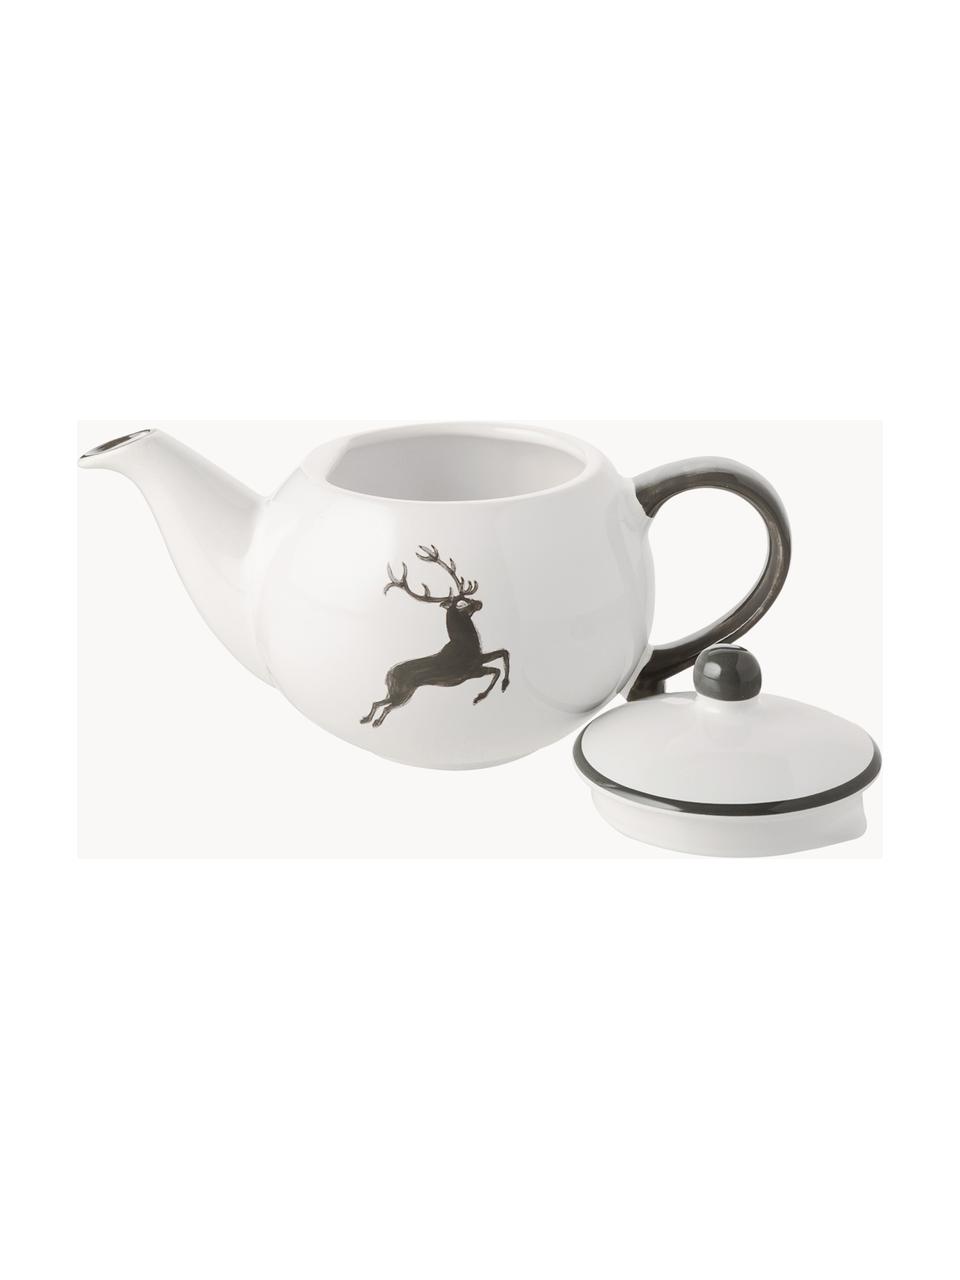 Handgefertigte Teekanne Grauer Hirsch, 500 ml, Keramik, Weiß, Grau, 500 ml